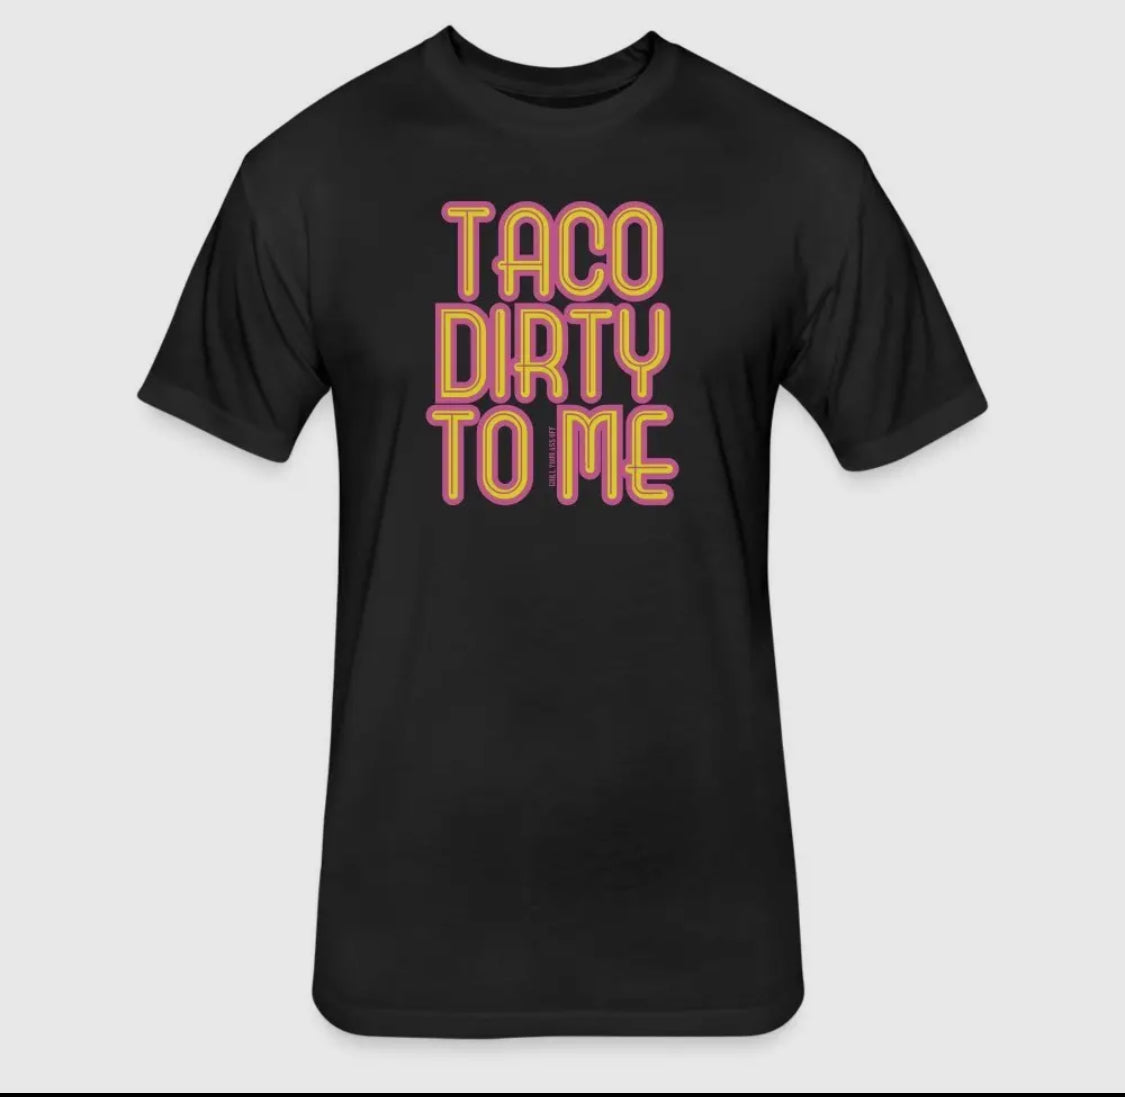 Taco dirty to me t-shirt